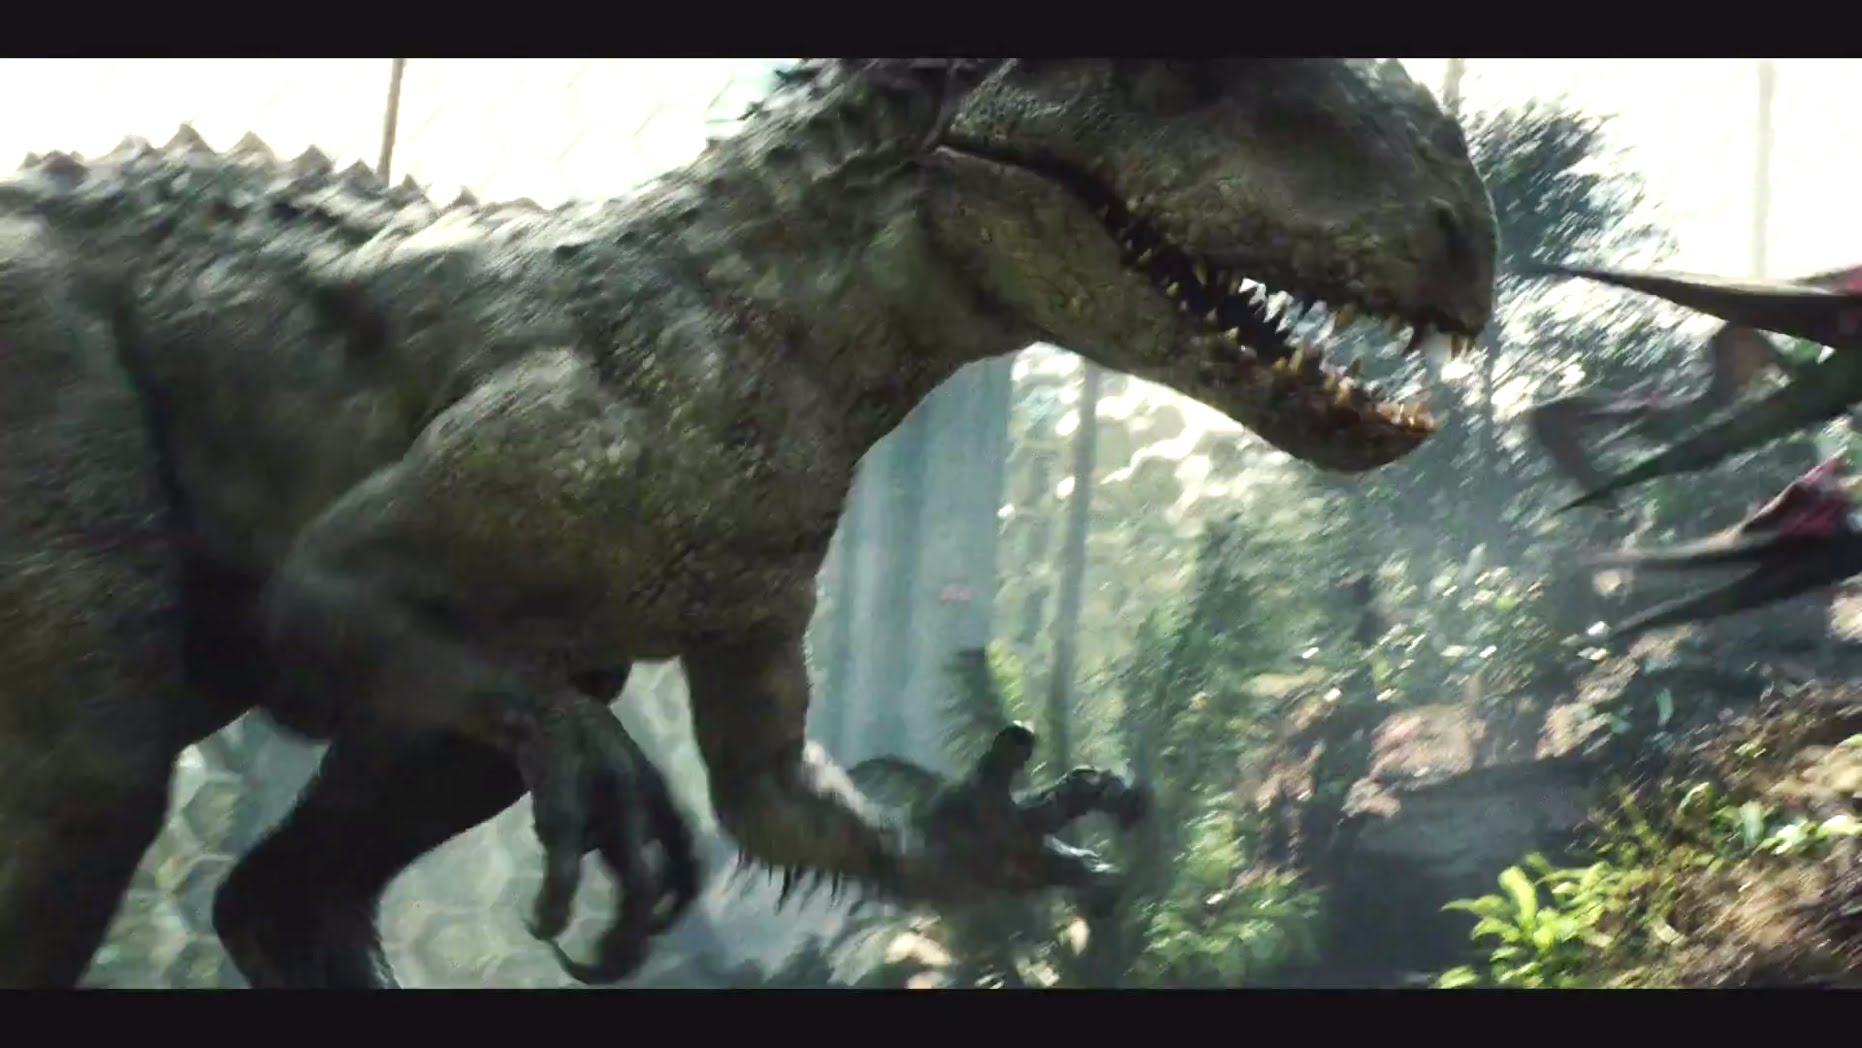 indominus rex fond d'écran,dinosaure,tyrannosaure,velociraptor,animal terrestre,personnage fictif